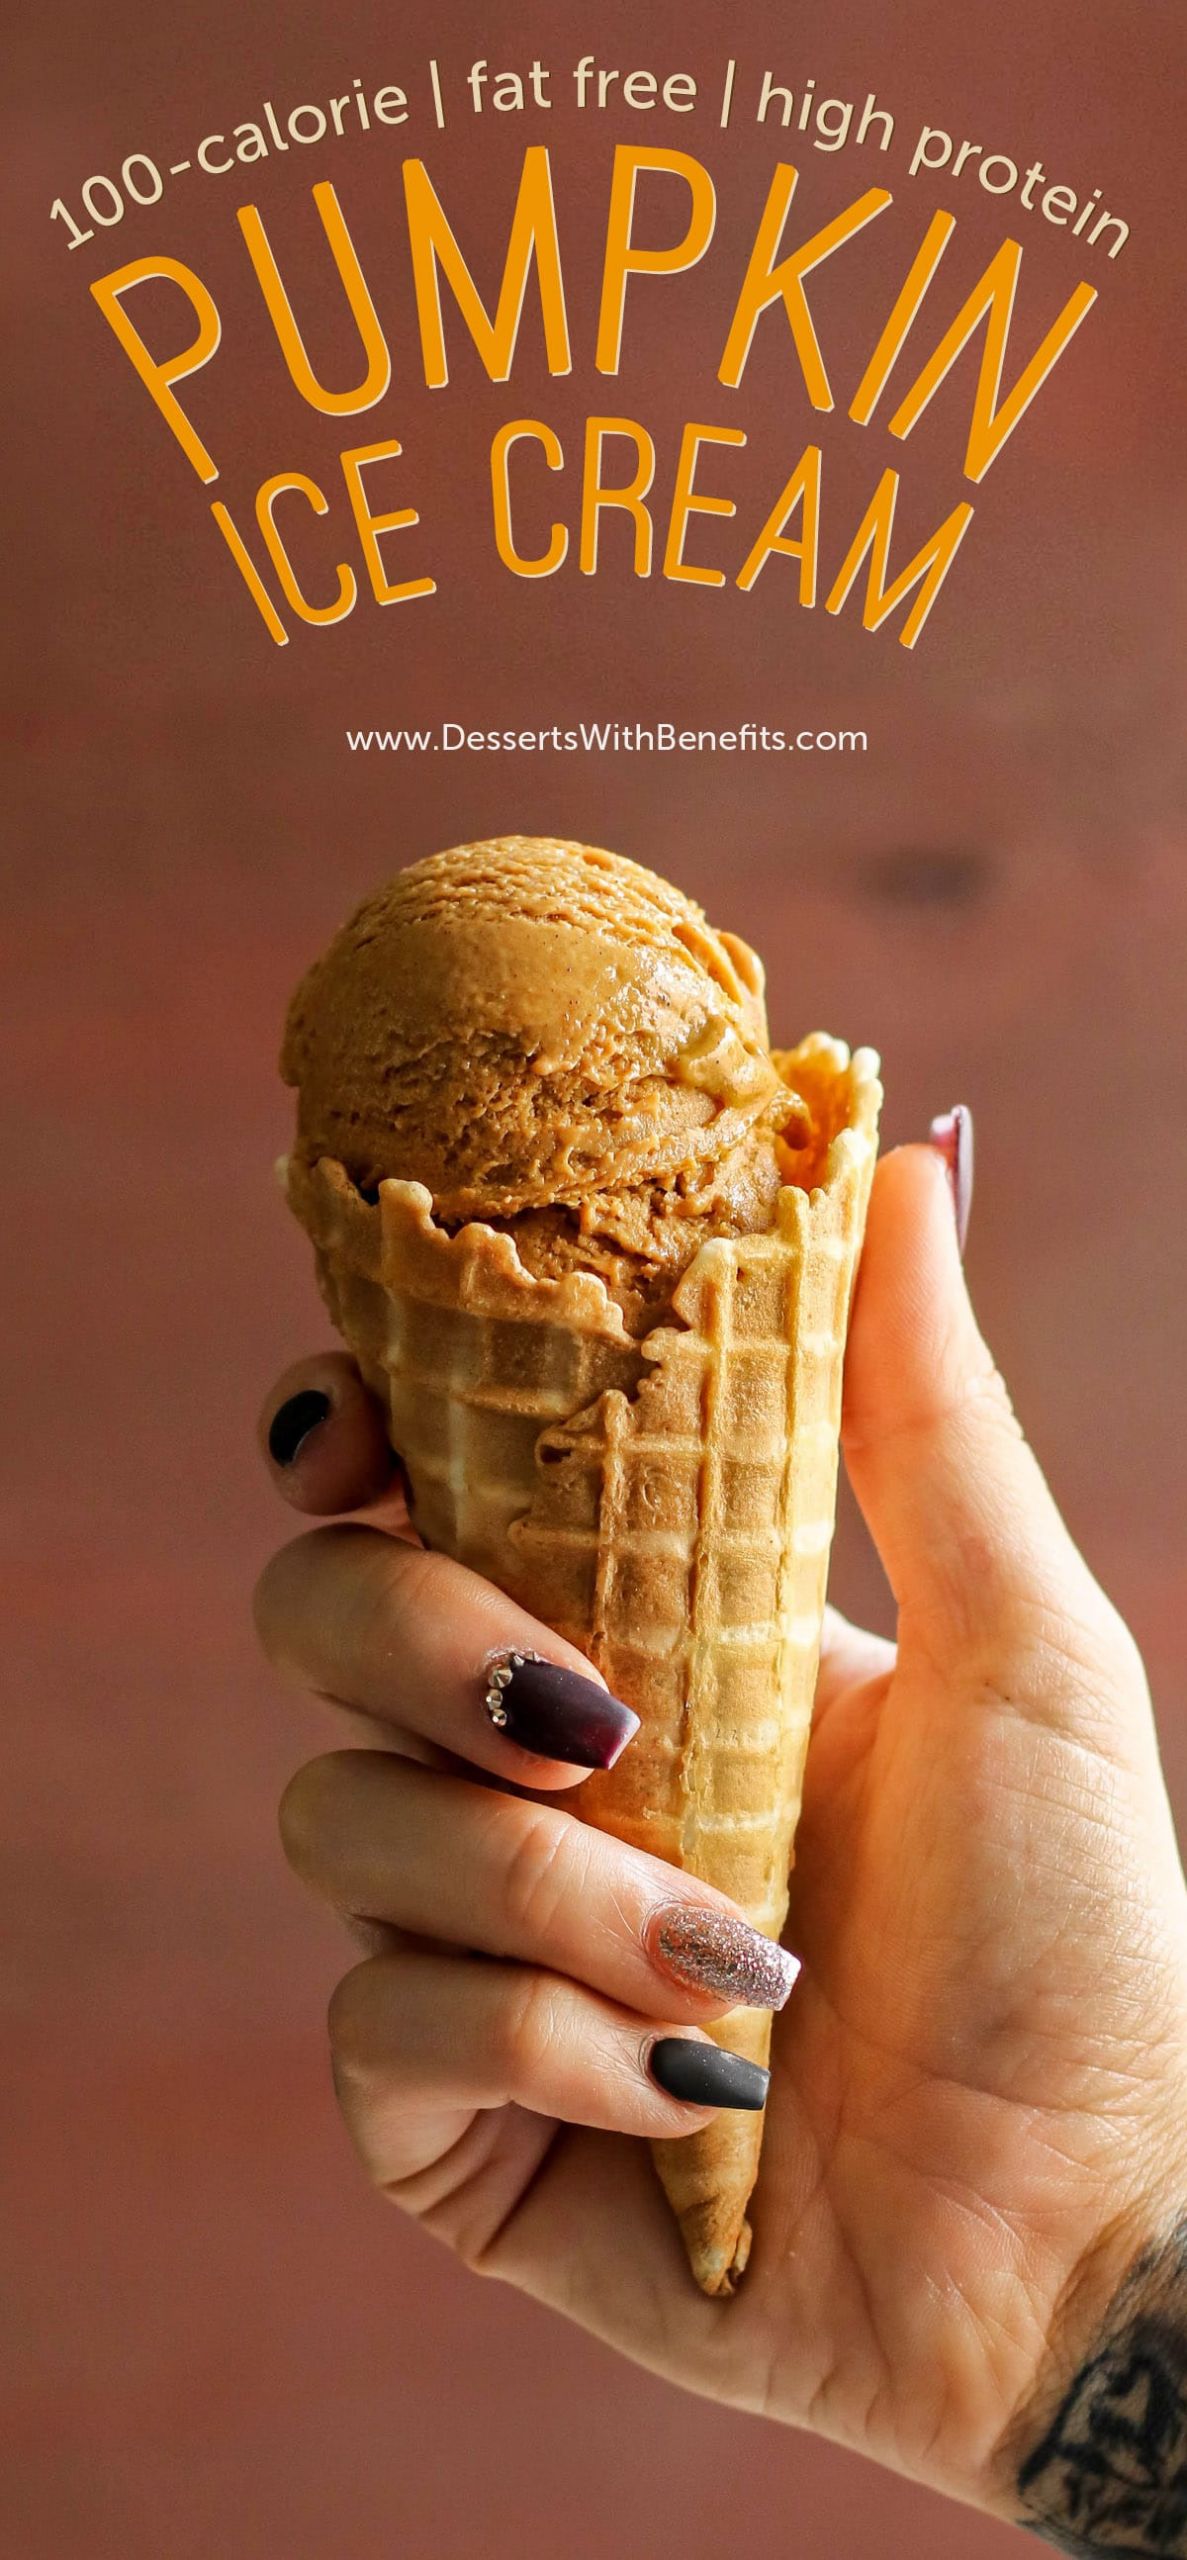 Low Calorie Ice Cream Recipes For Ice Cream Maker
 ULTRA Creamy 100 Calorie Fat Free Pumpkin Ice Cream Recipe